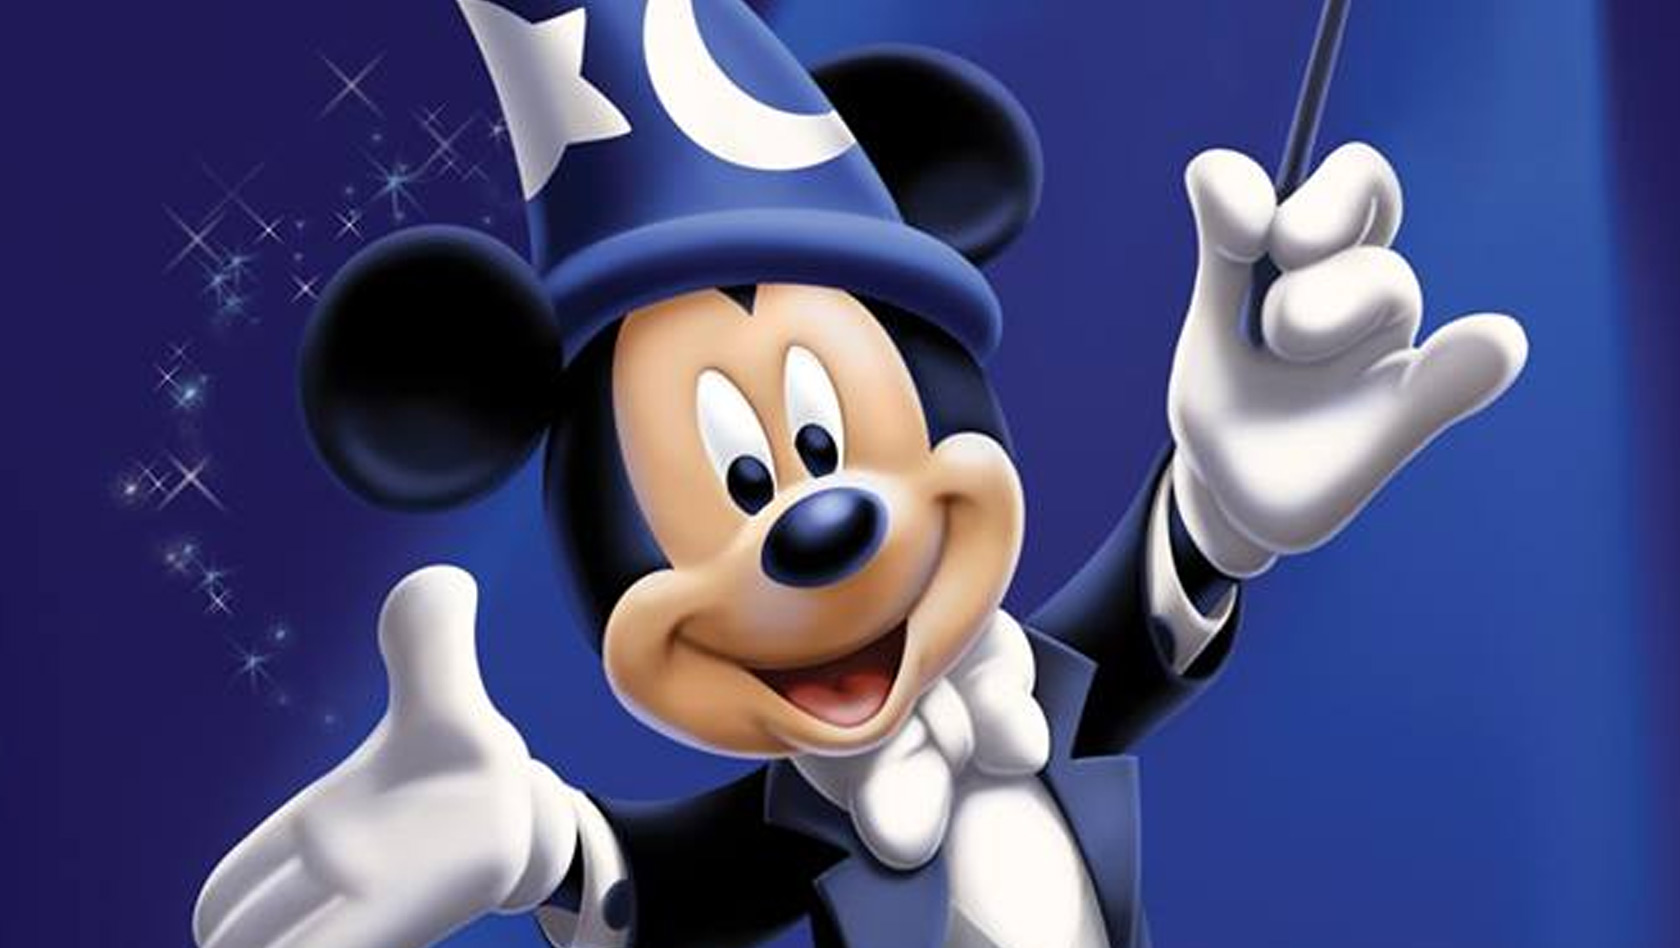 Mickey's Philhamagic Disneyland paris Teaser